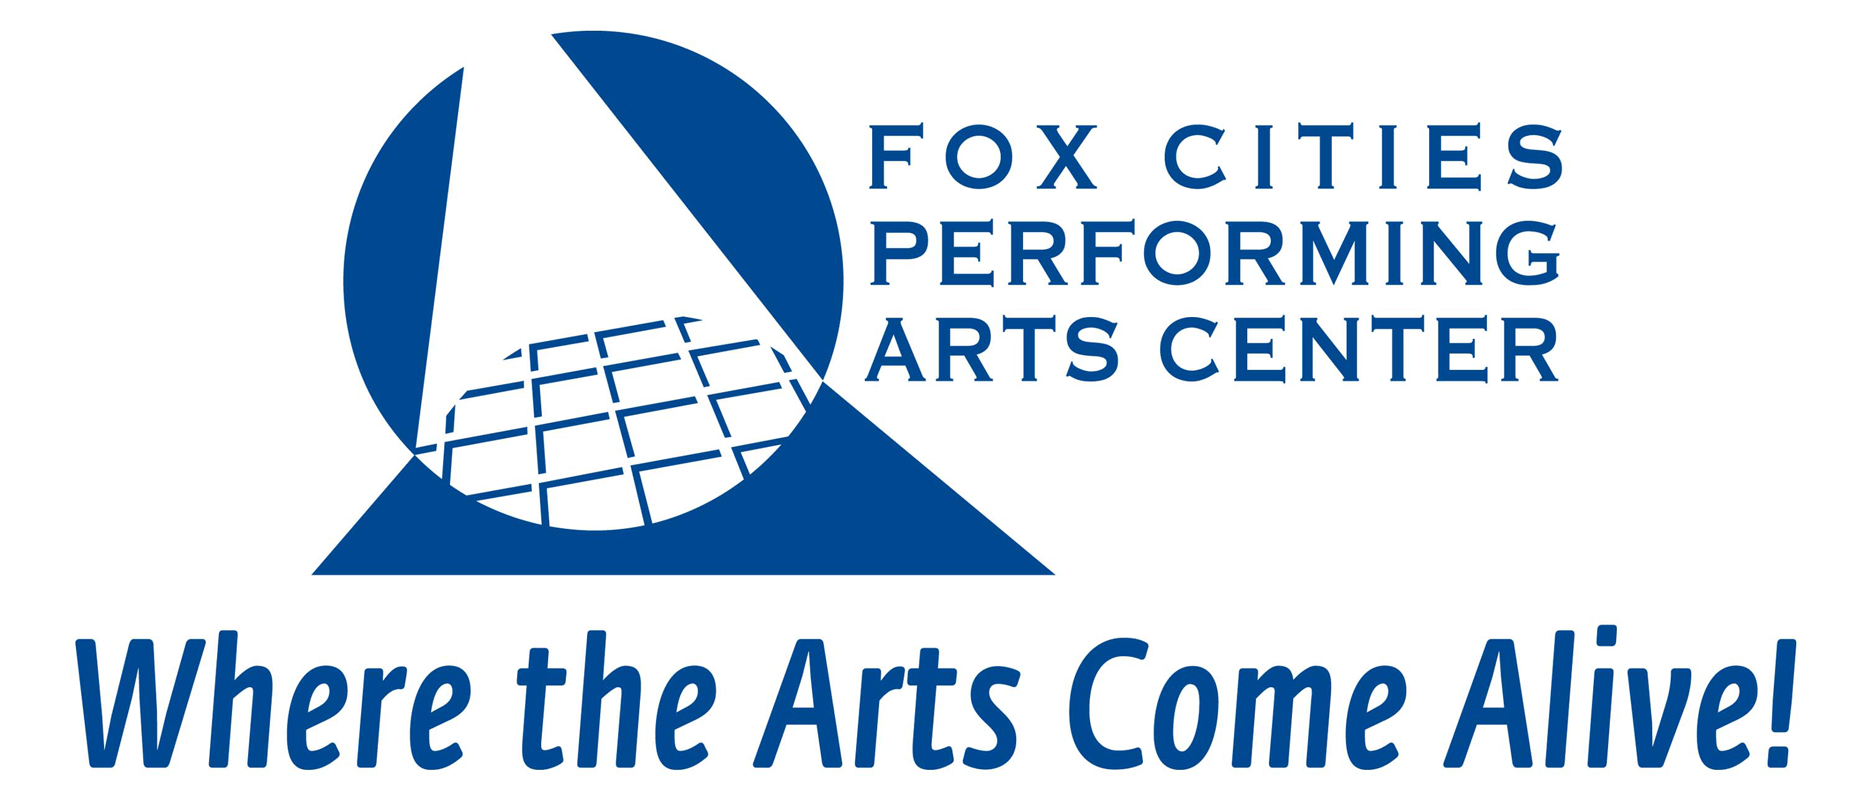 Fox-Cities-Performing-Arts-Center